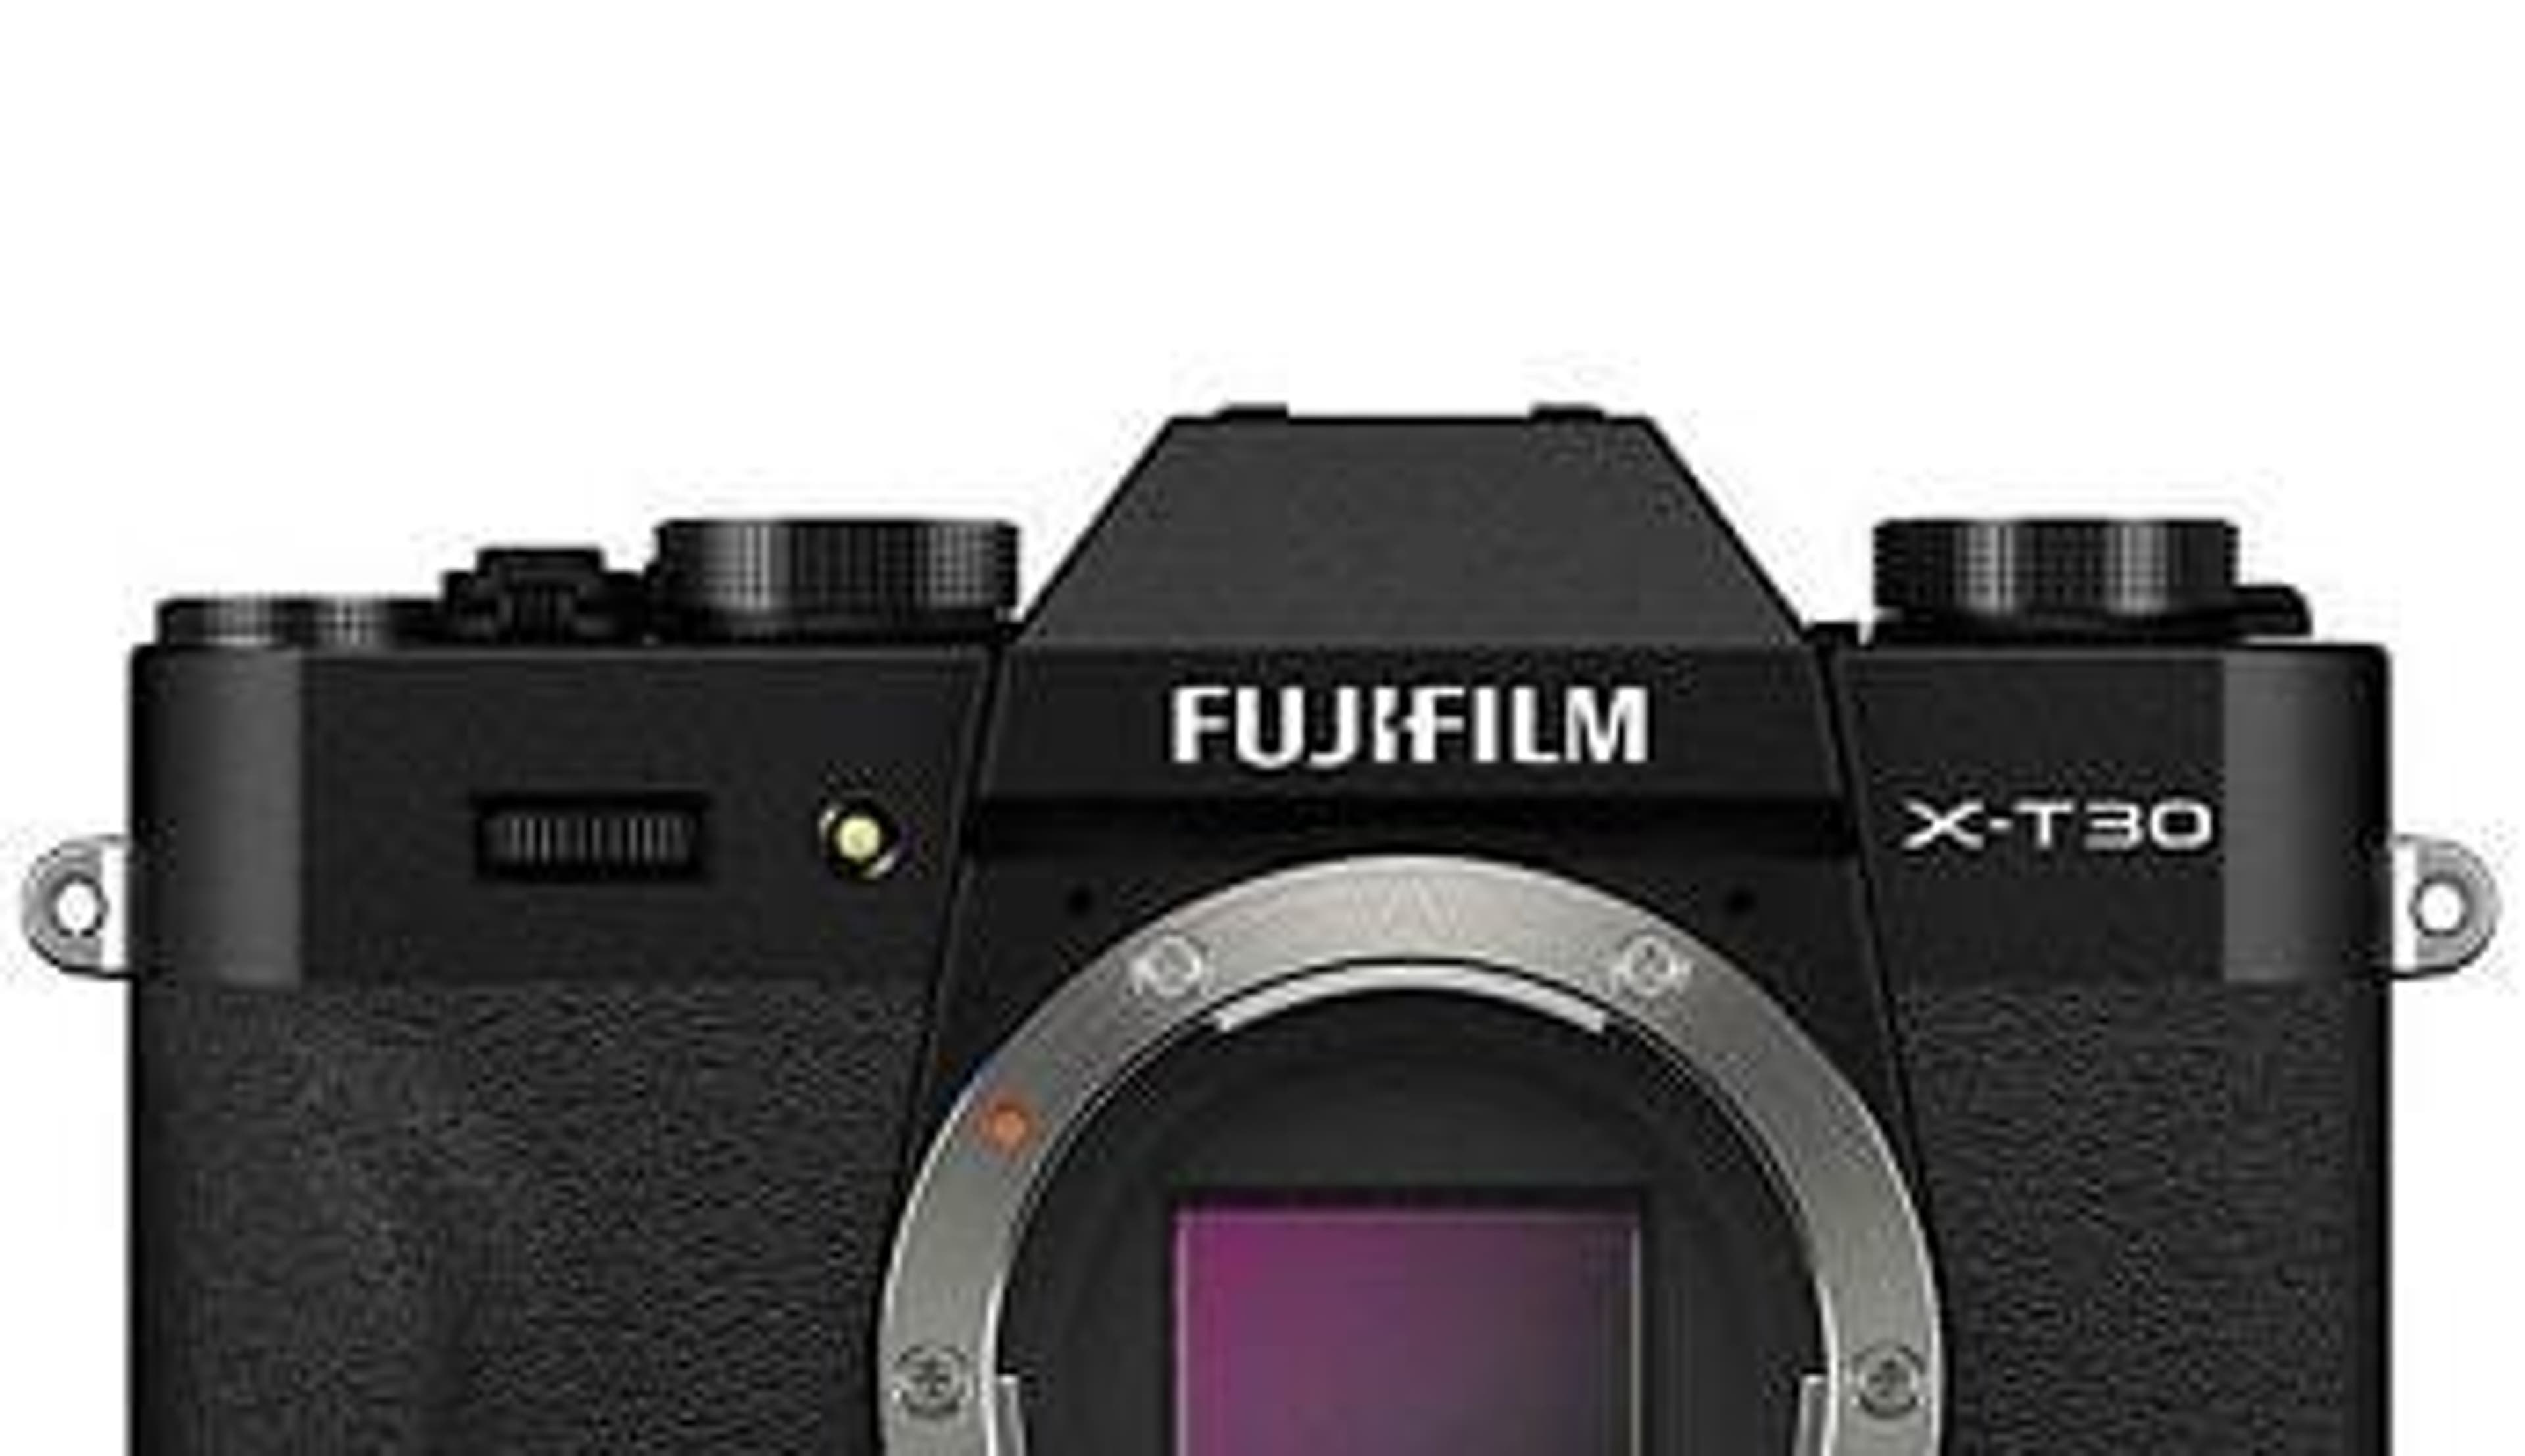  Mirrorless Fujifilm Camera from Jessops 